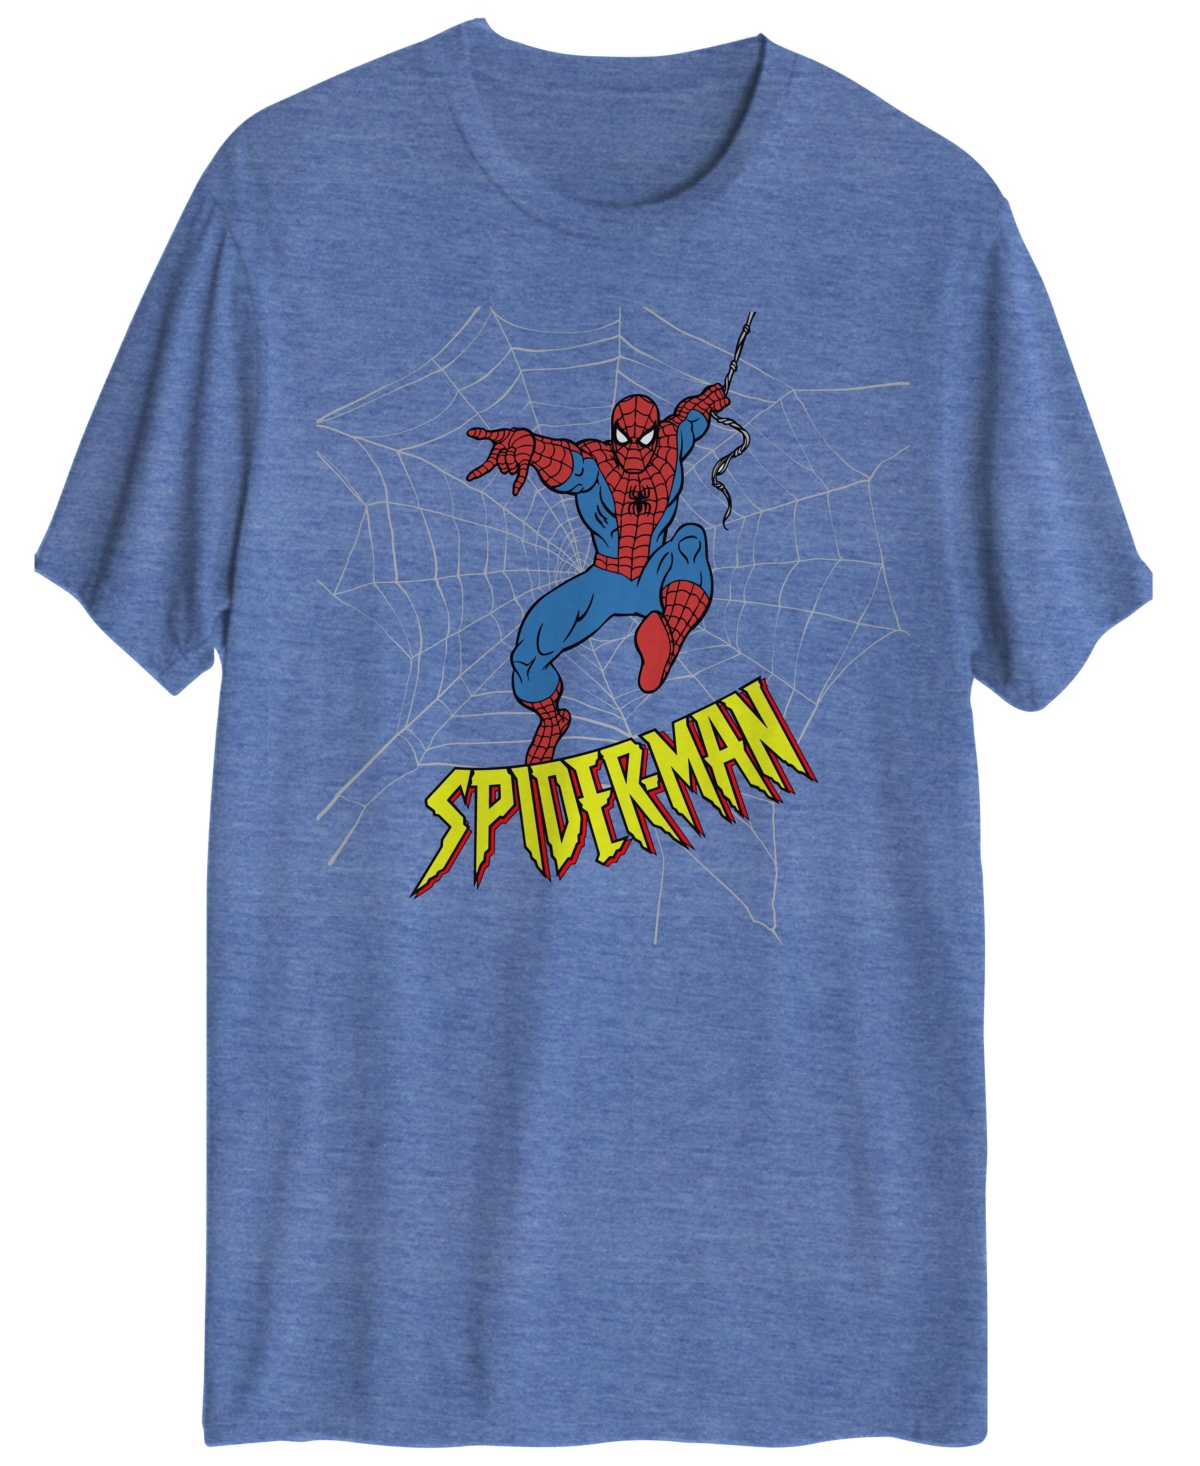 Men's Spiderman Short Sleeve T-shirt - Royal Heather Blue